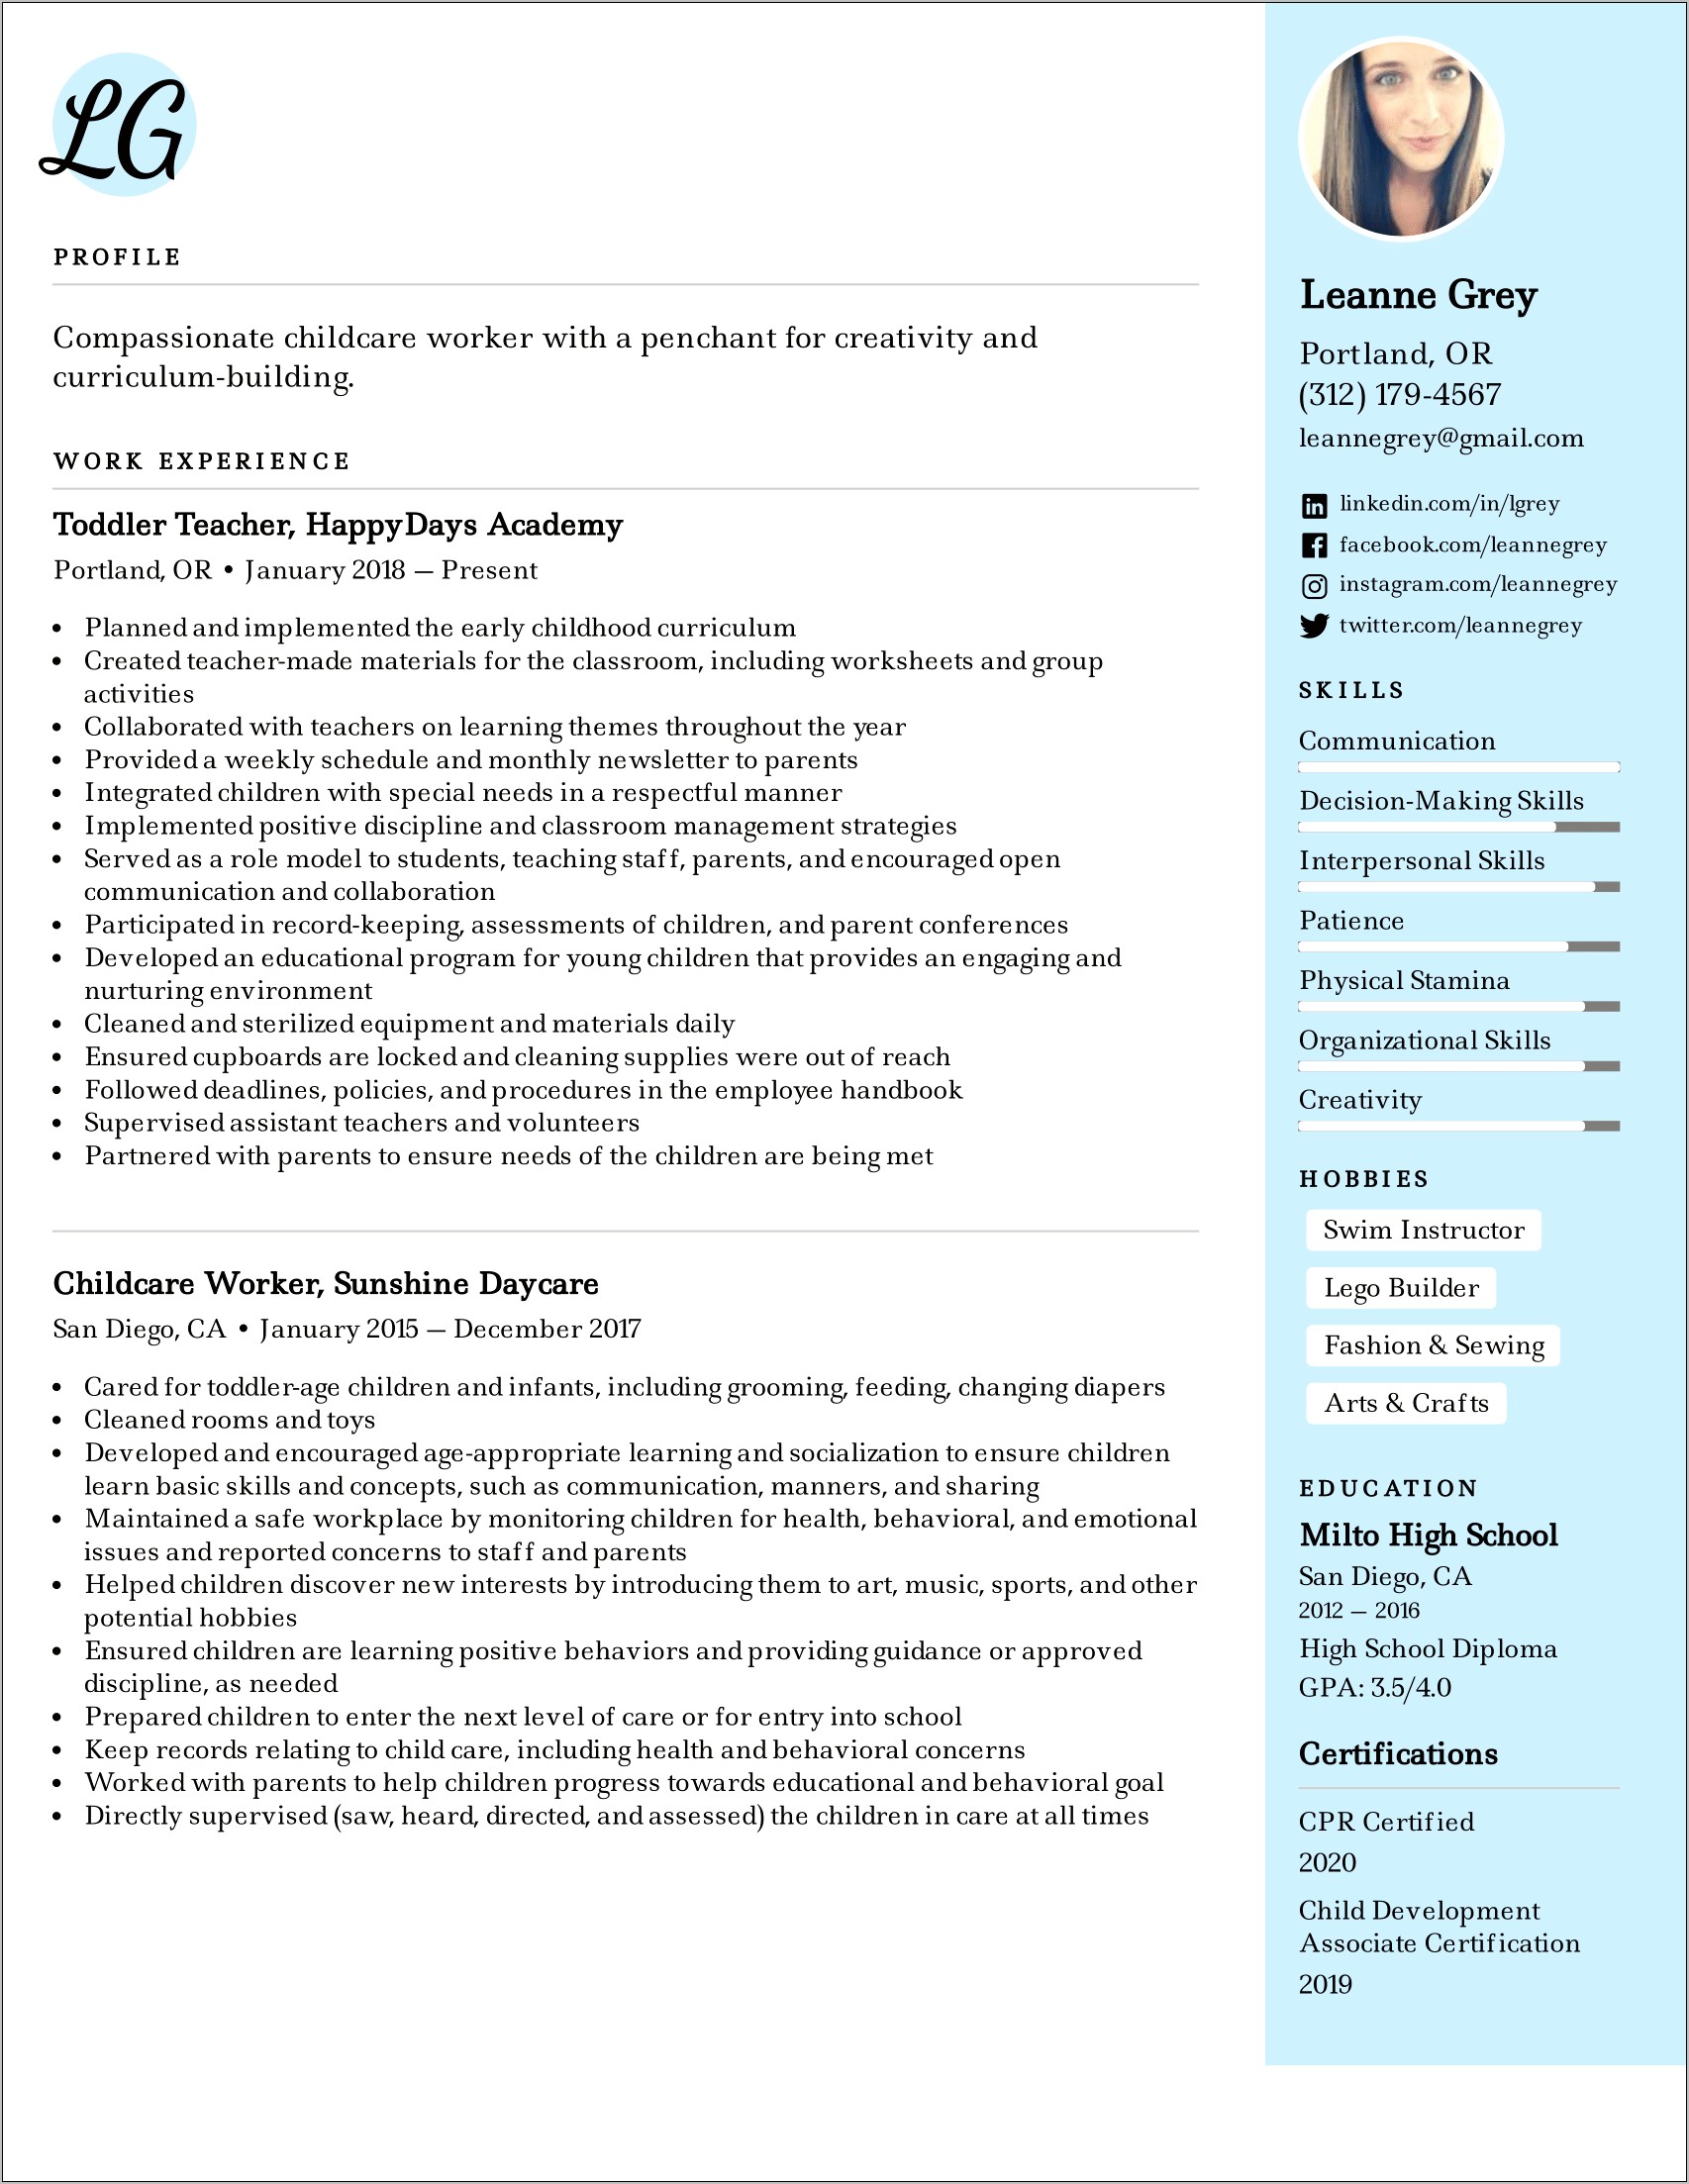 Resume Skills List For High School Students